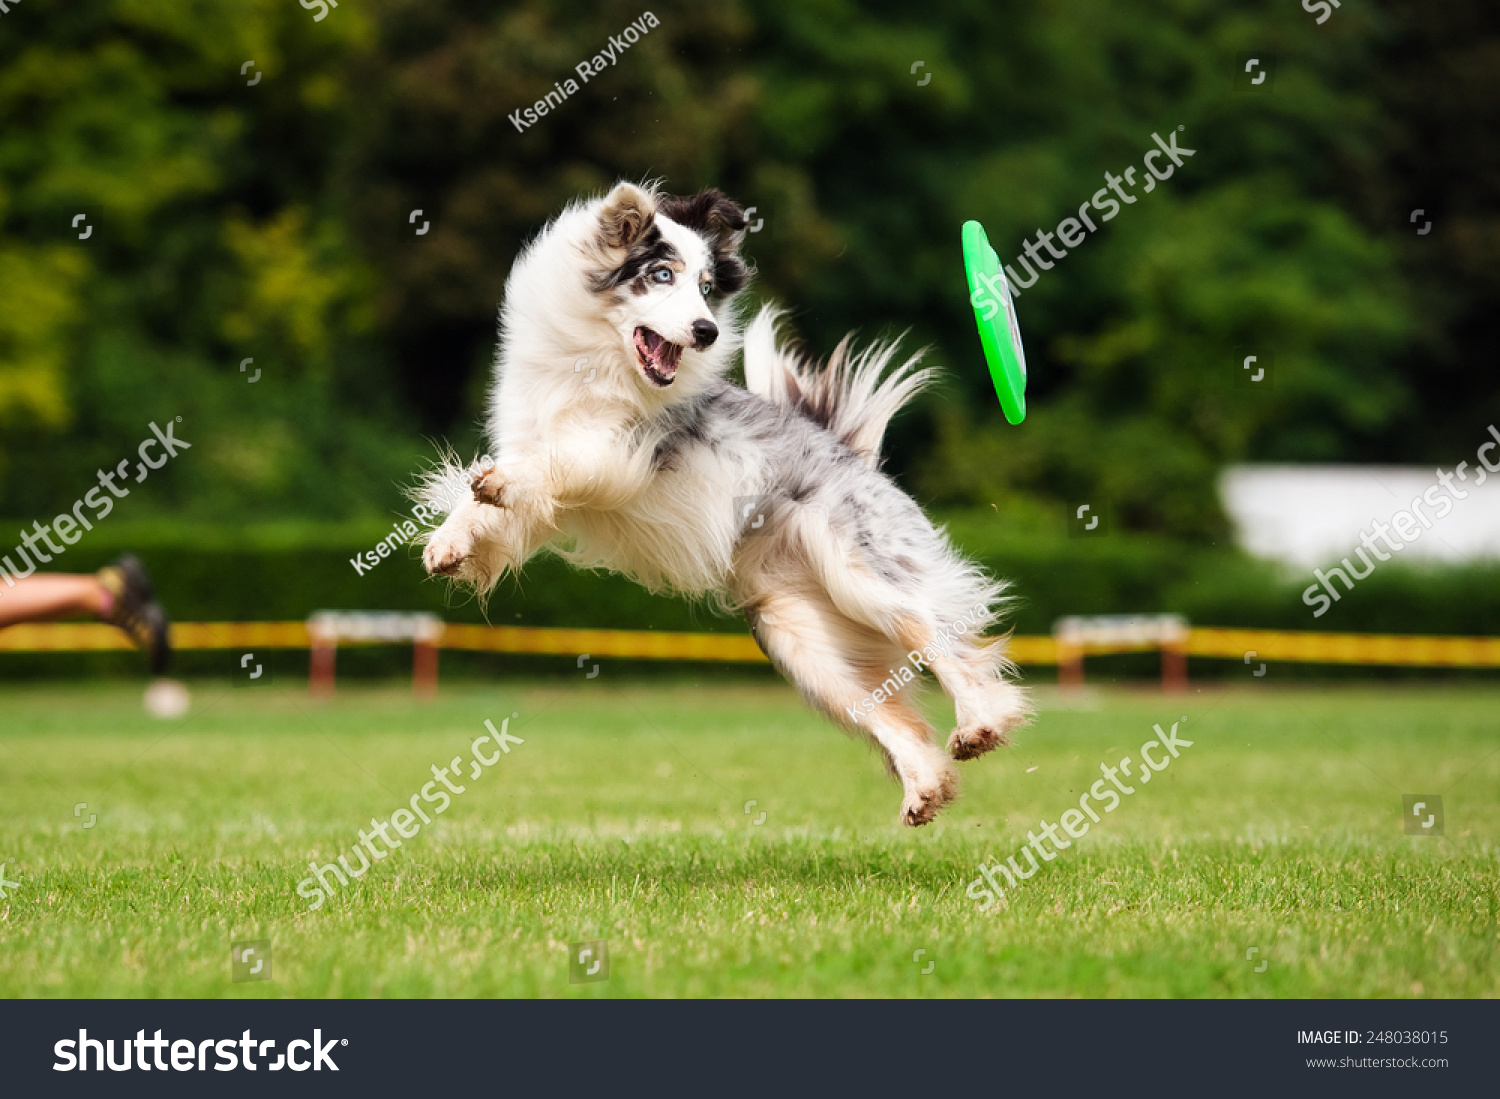 Border collie dog in jump in summer #248038015